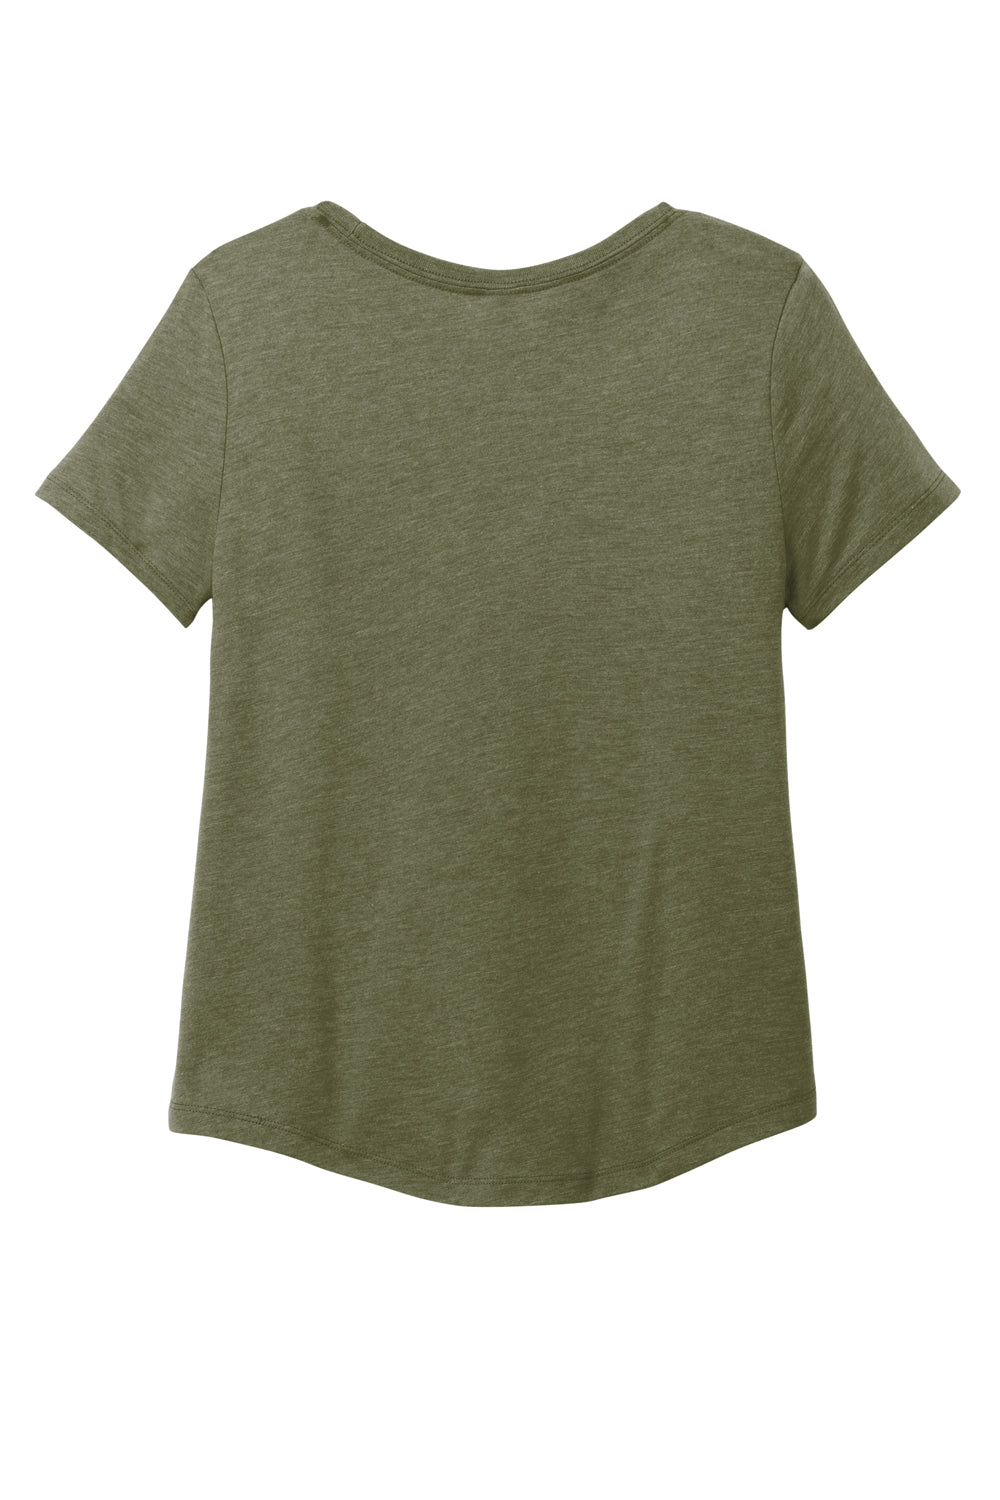 Allmade AL2015 Womens Short Sleeve Scoop Neck T Shirt Olive You Green Flat Back